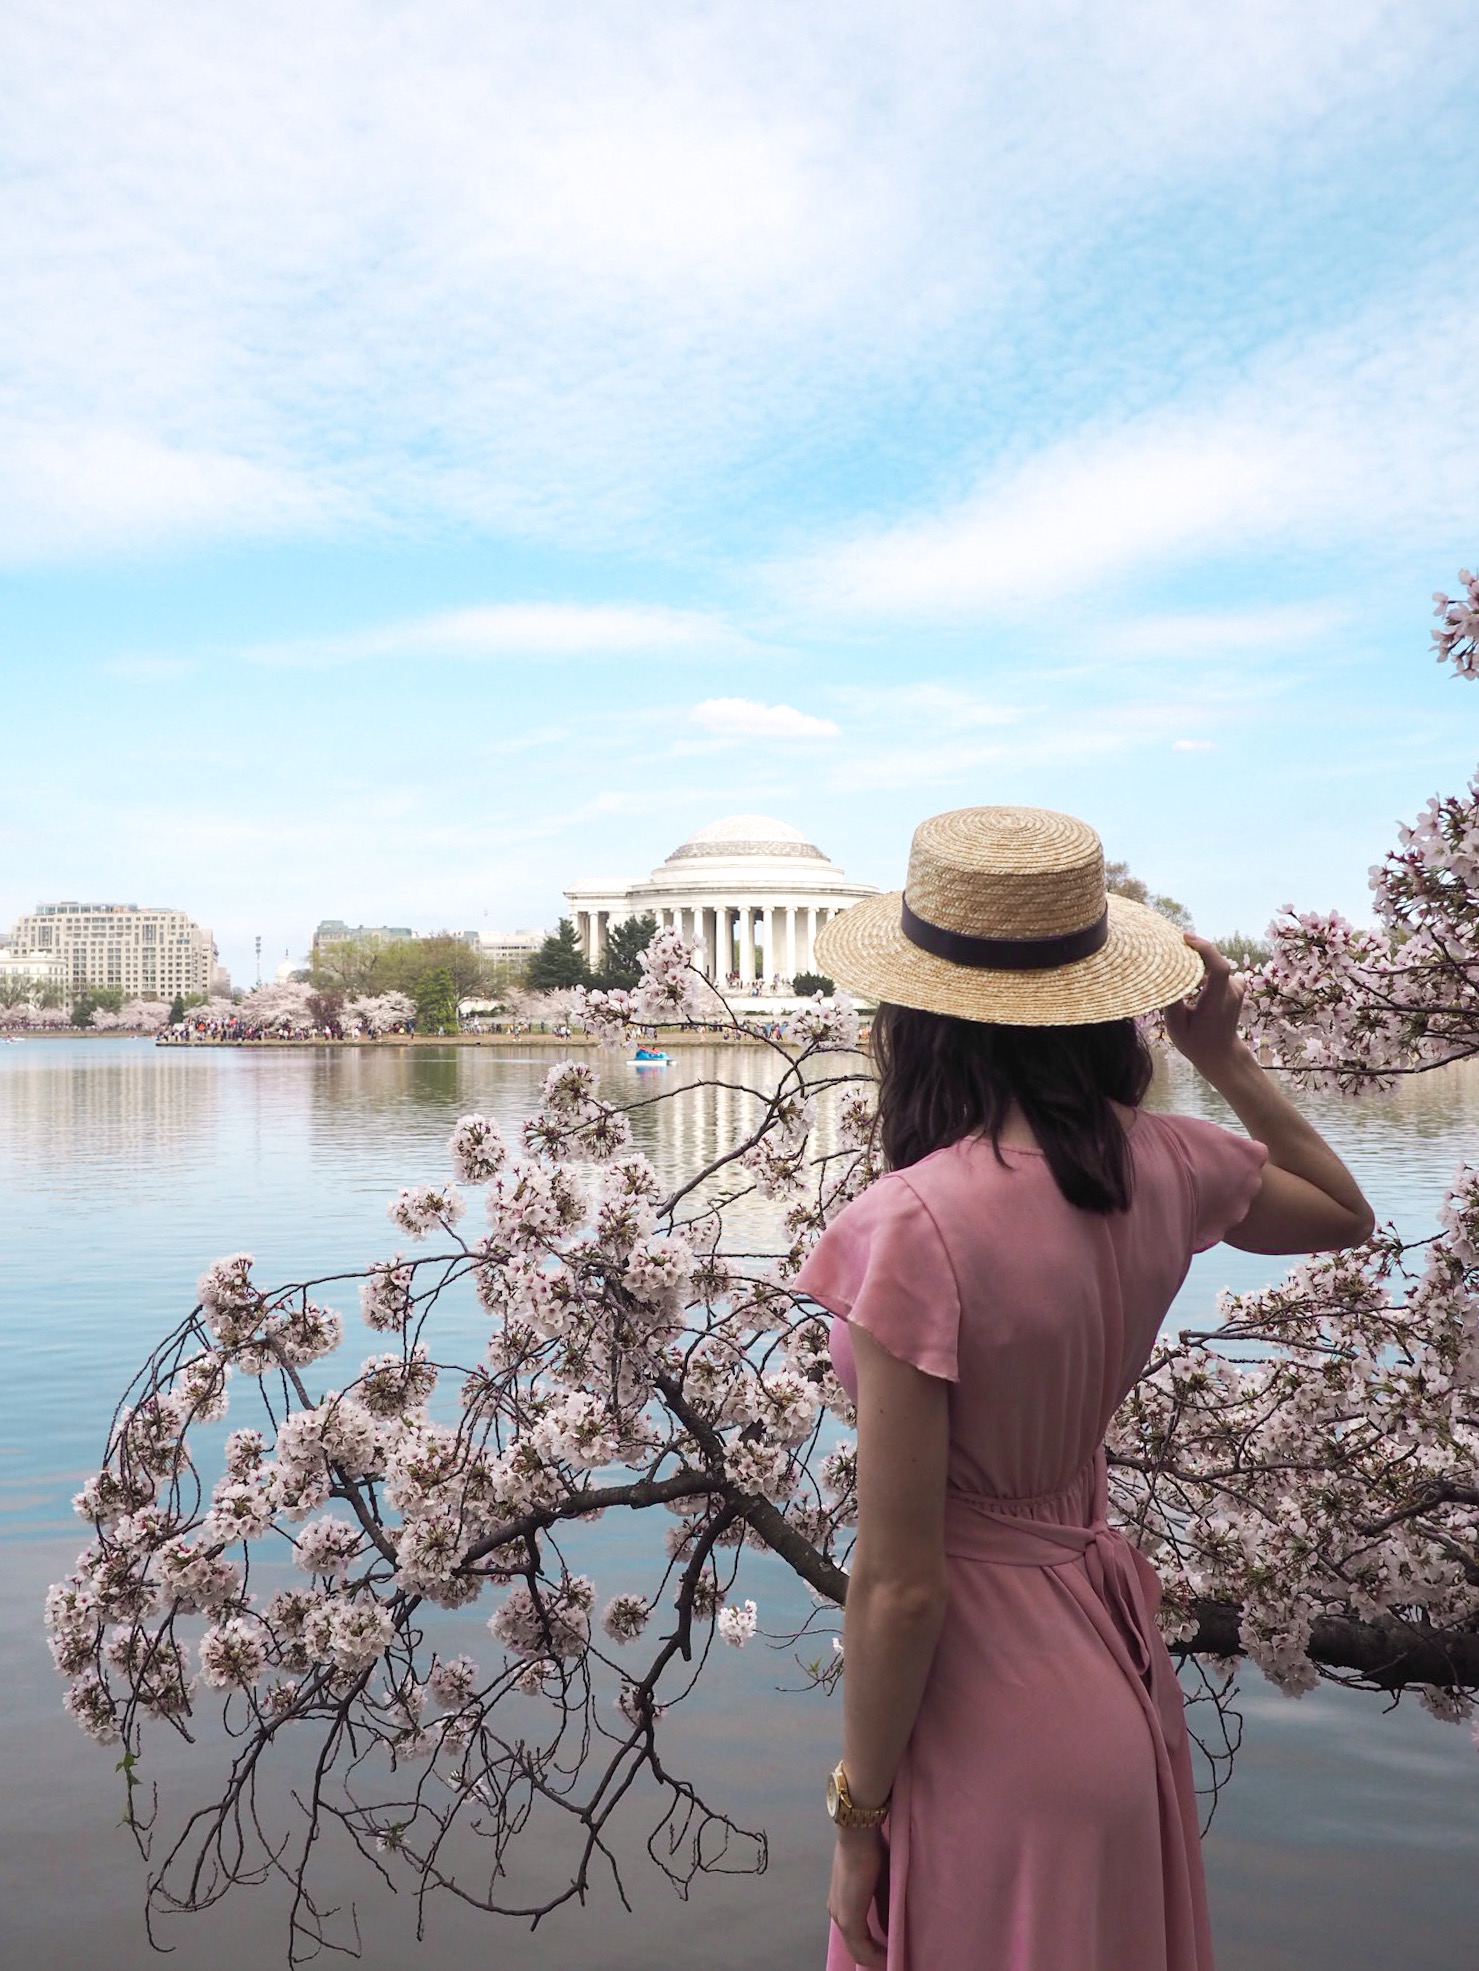 Yoshino Trees - Cherry Blossom trees in Washington D.C.